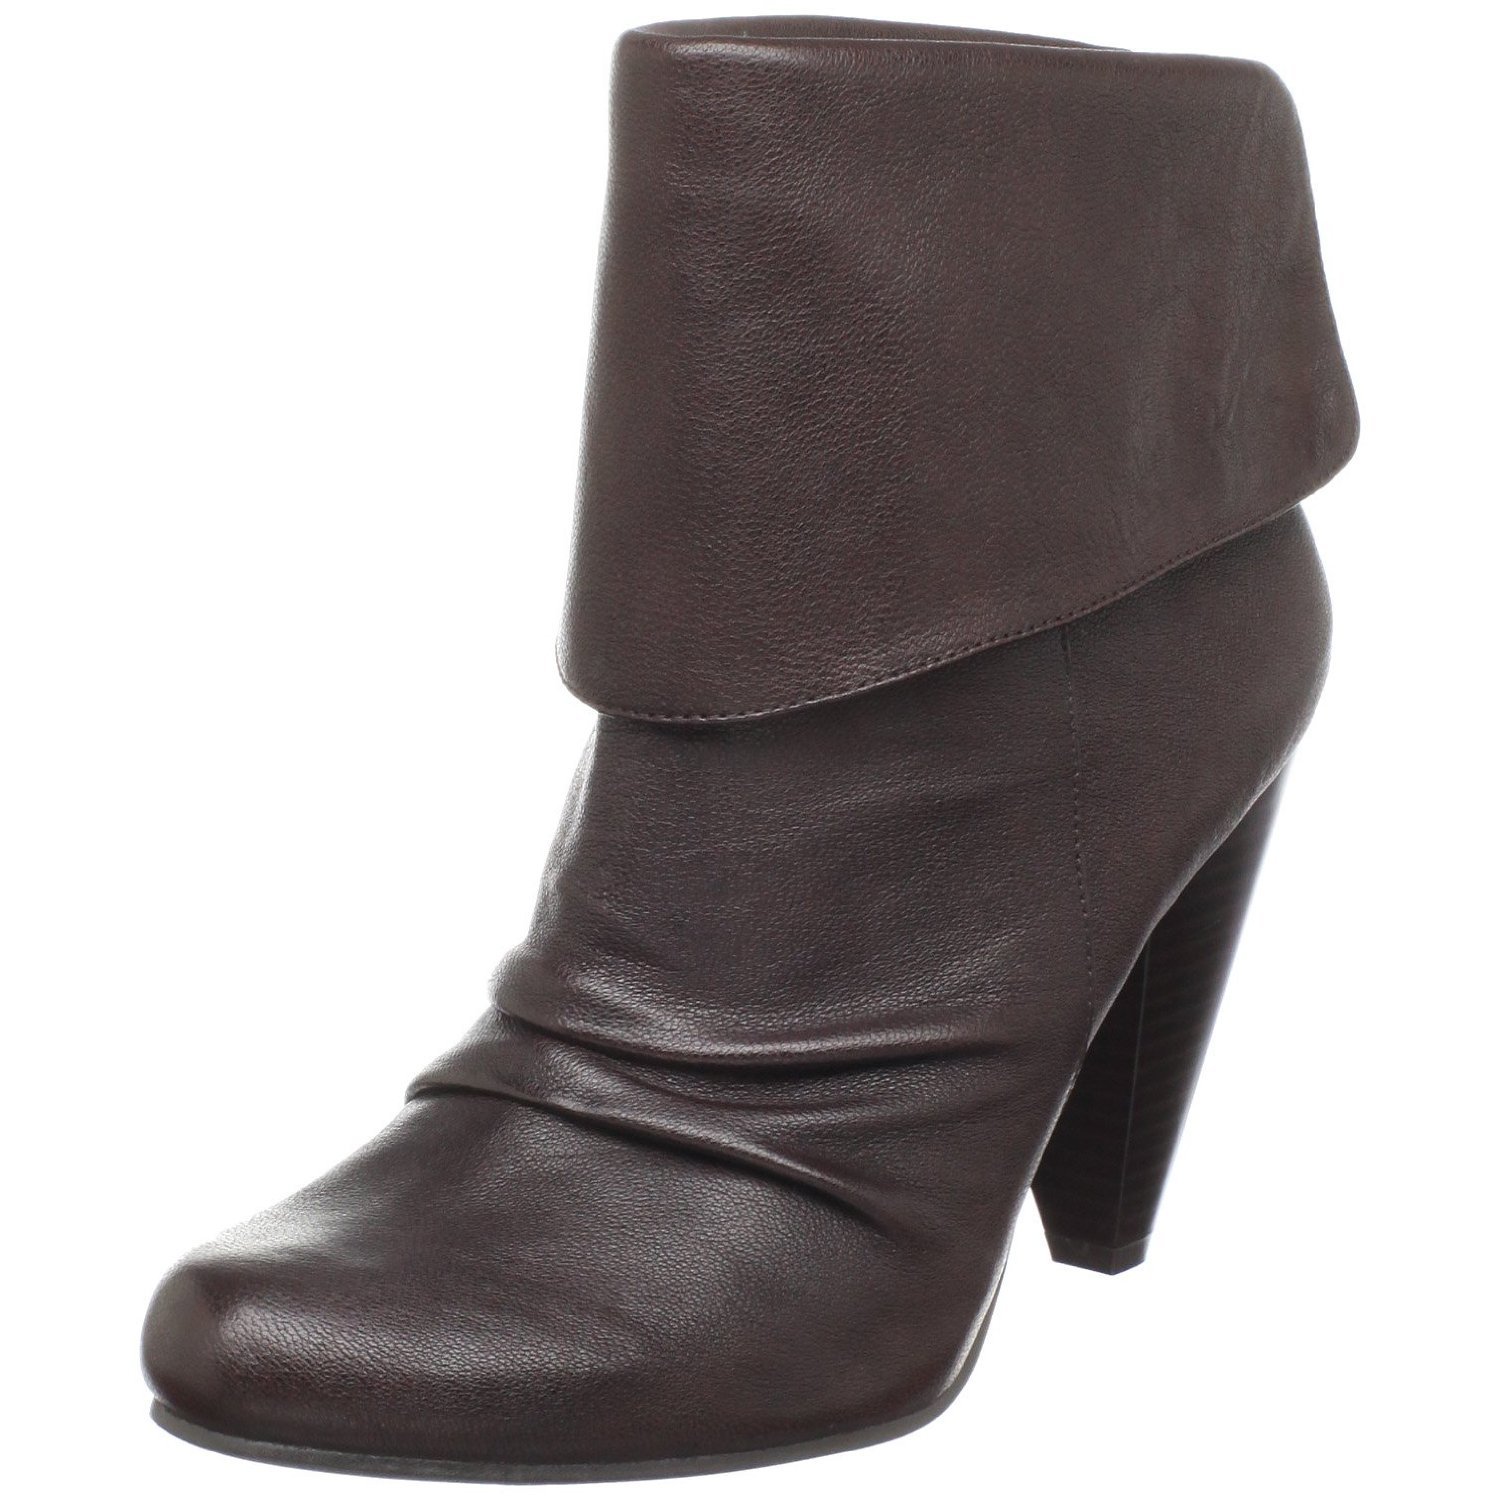 Jessica Simpson Adora Ankle Boots Women's Espresso Size 8 US